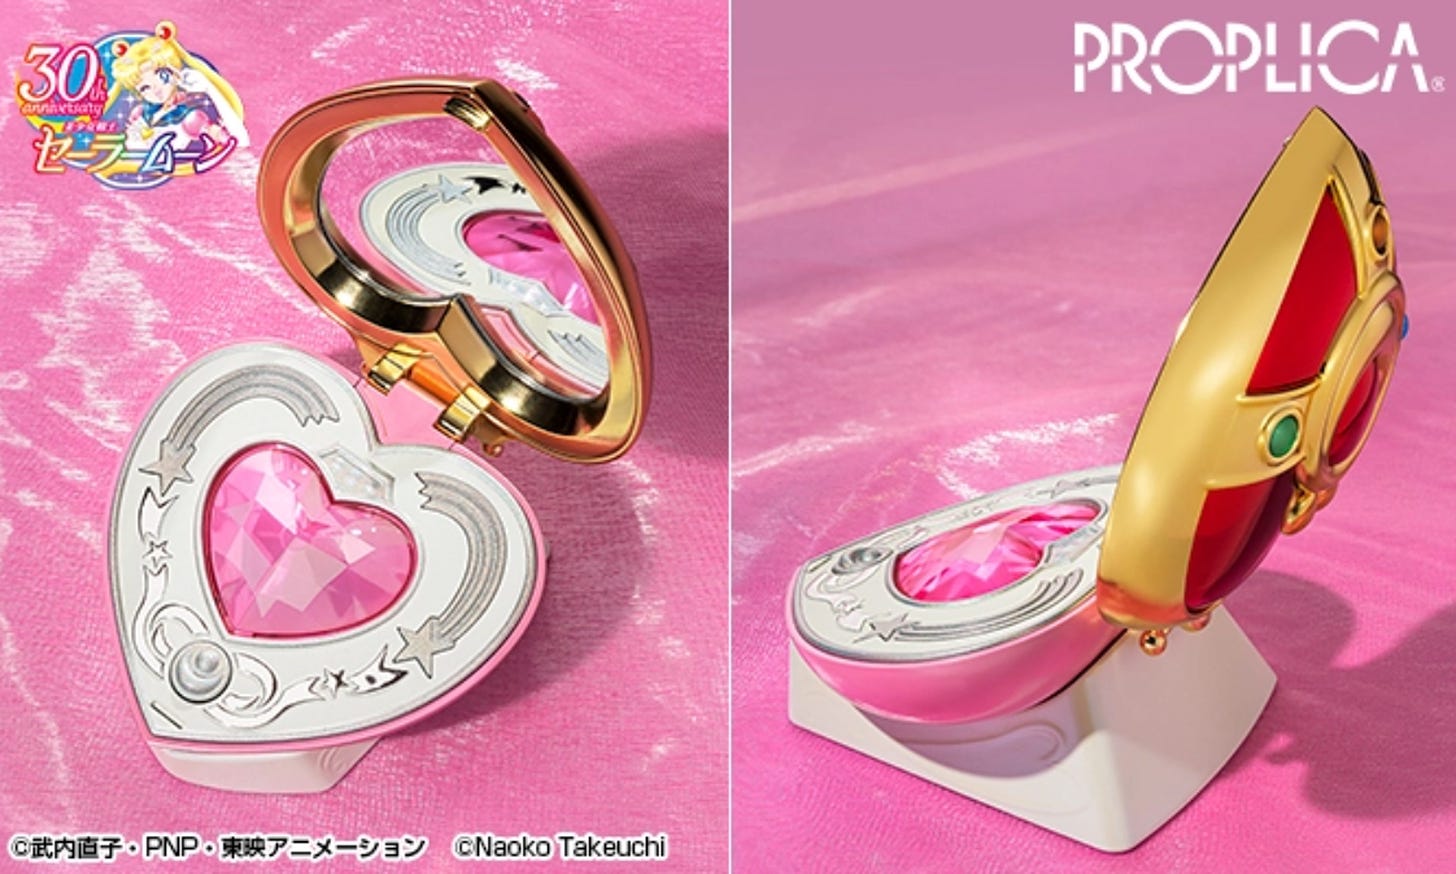 Sailor Moon Cosmic Heart Compact Brilliant Color Edition Proplica